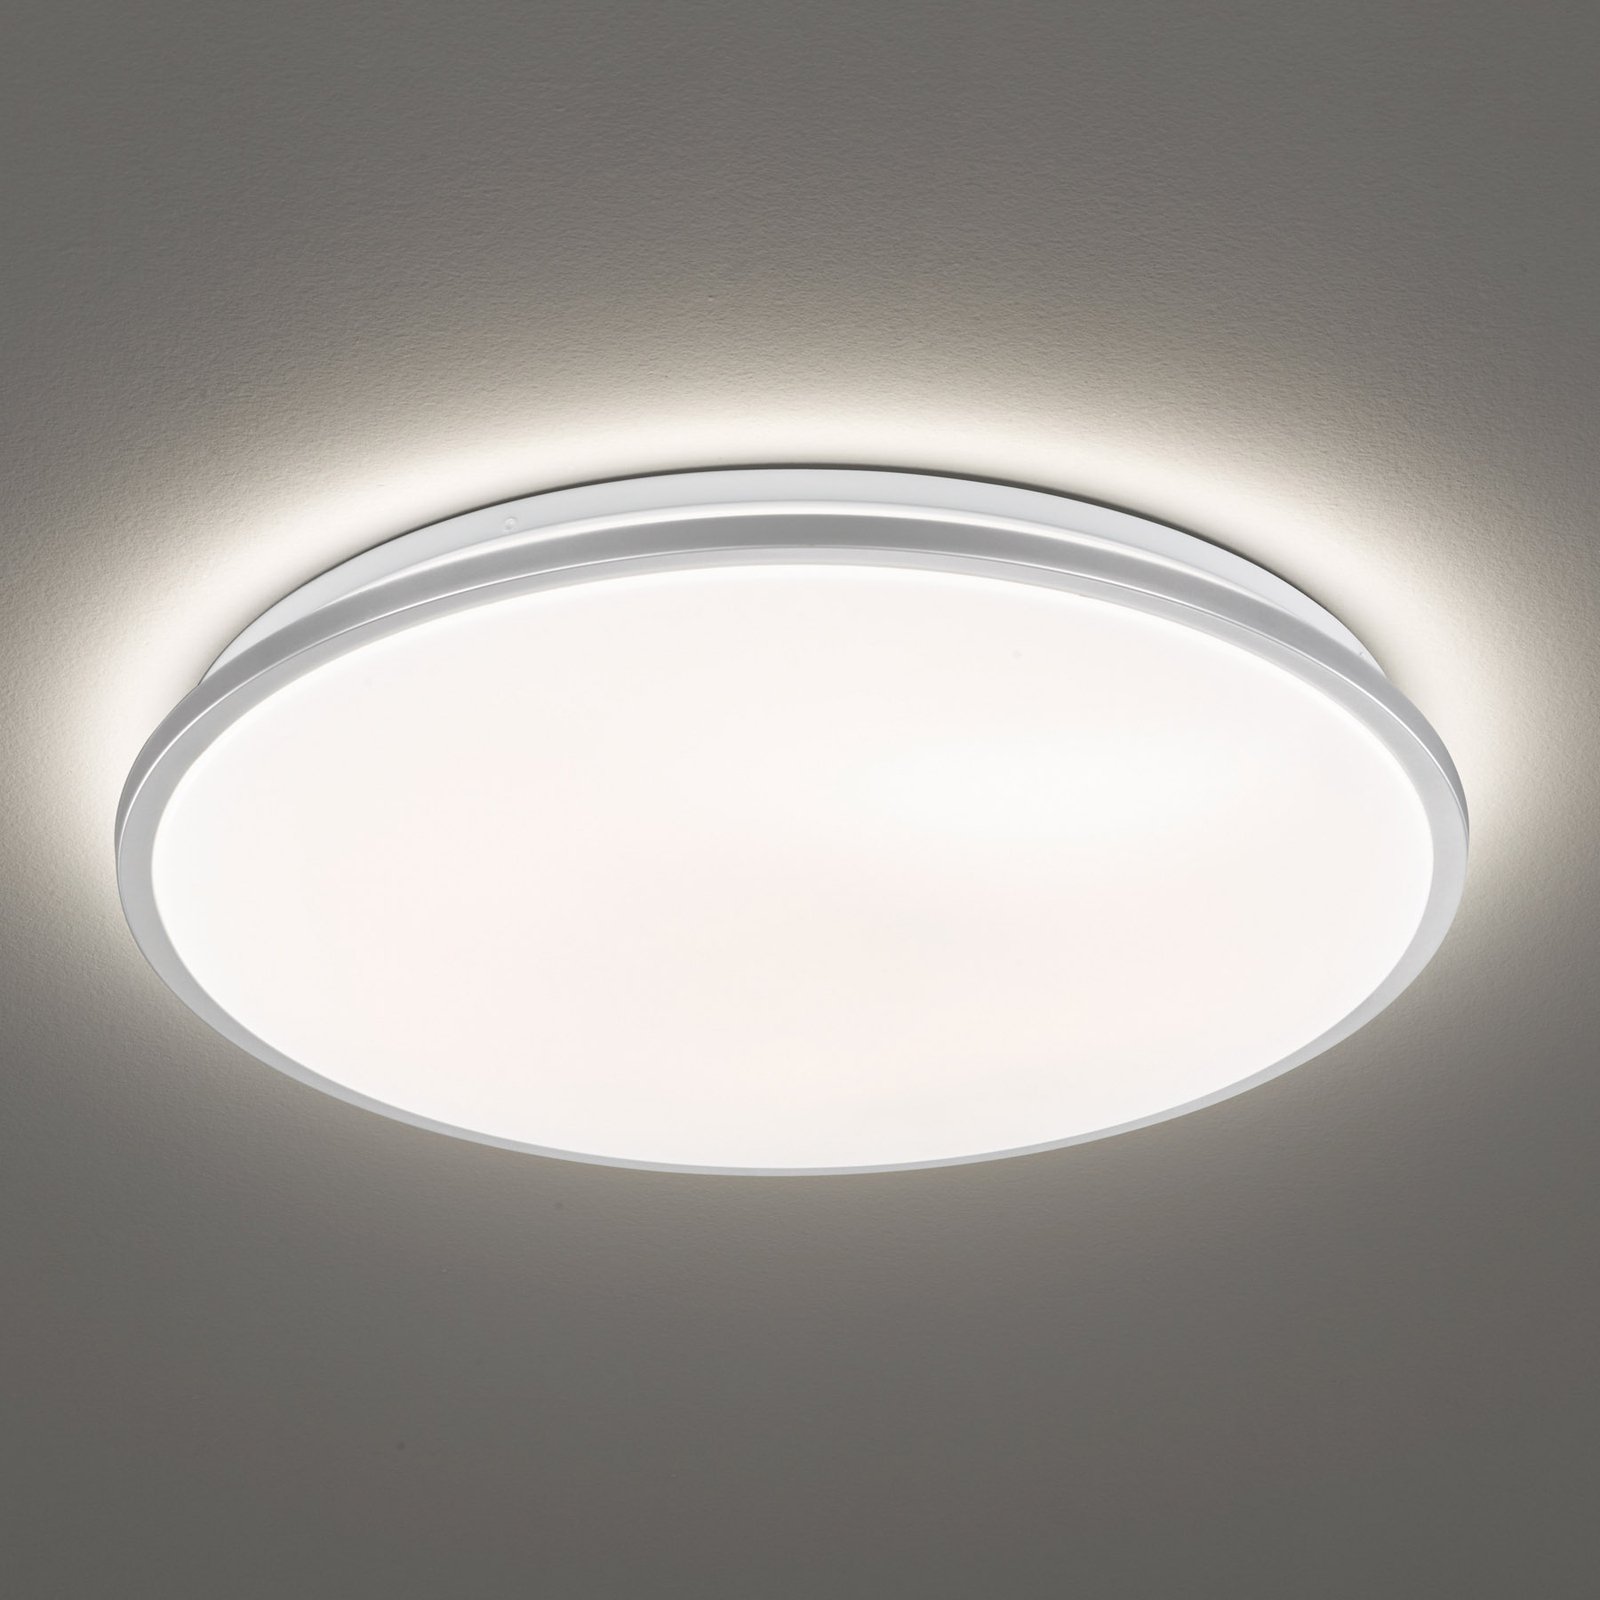 Lampa sufitowa LED Jaso, ściemniana, Ø 40 cm, srebrna